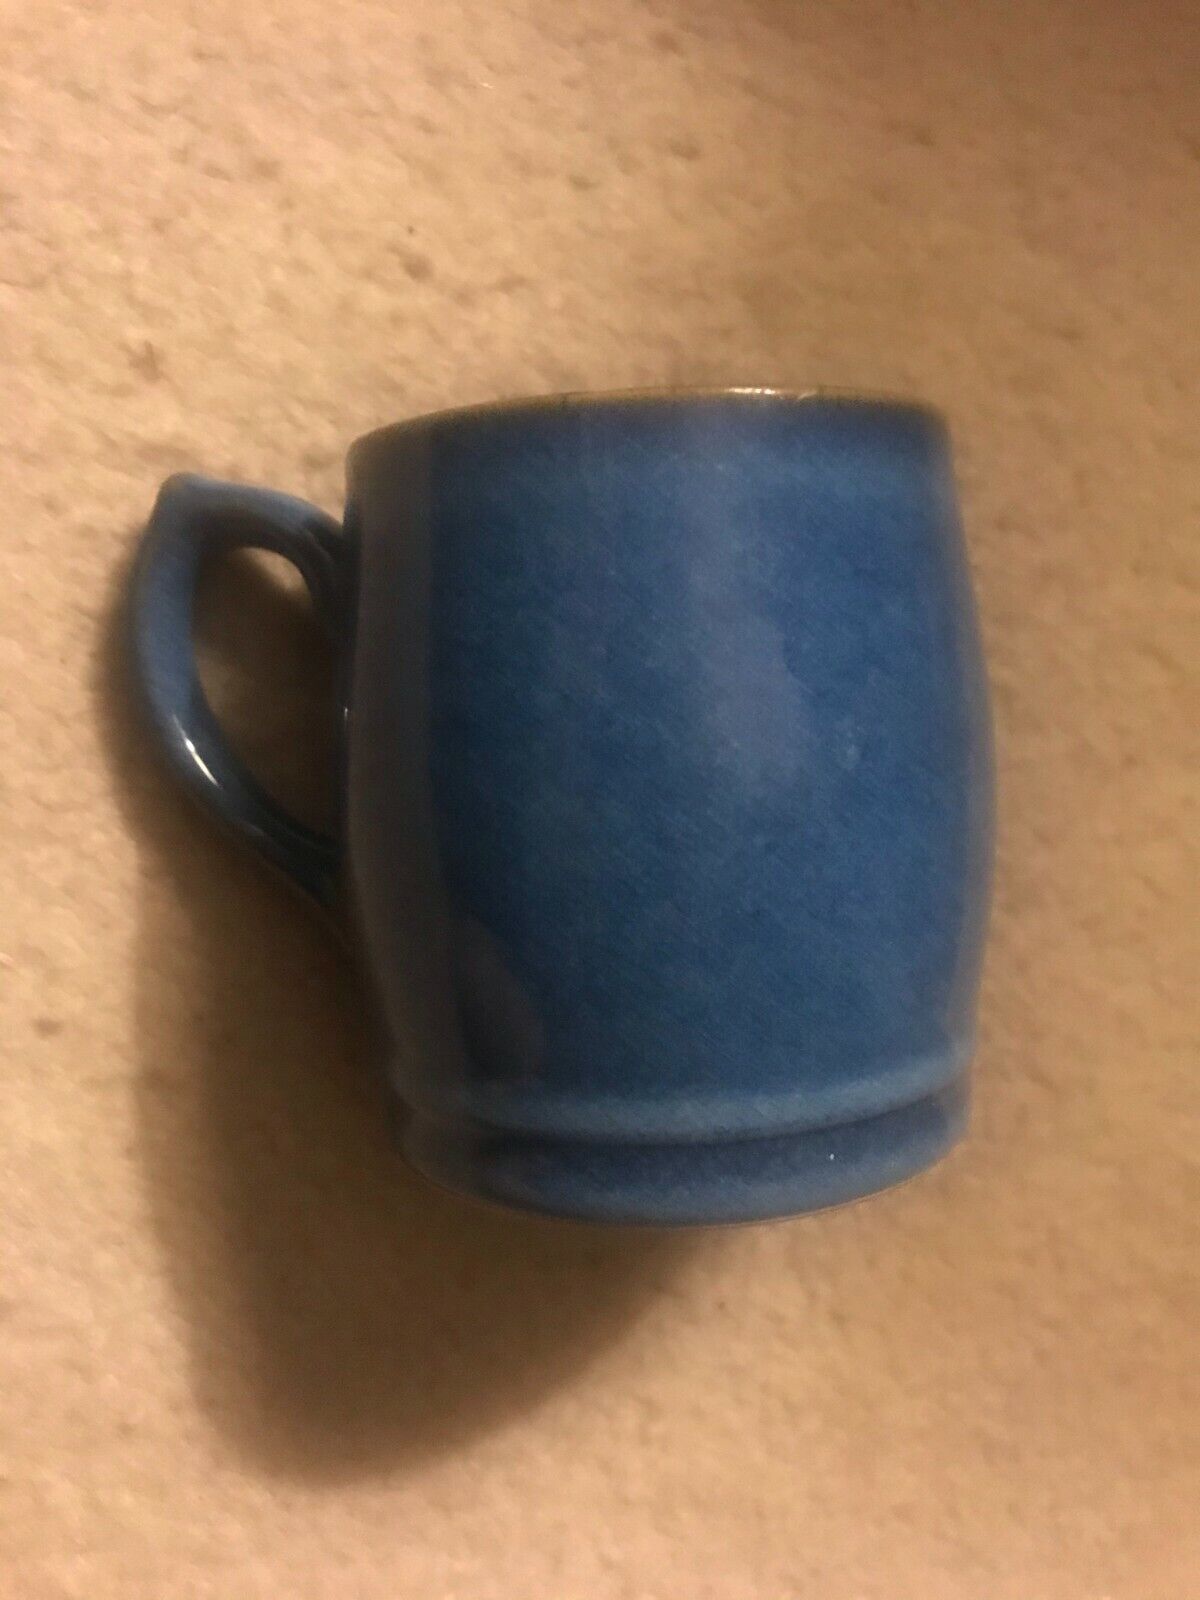 Rare Vintage / Antique Chinese Jun Style Blue Porcelain Mug / Cup - 3\